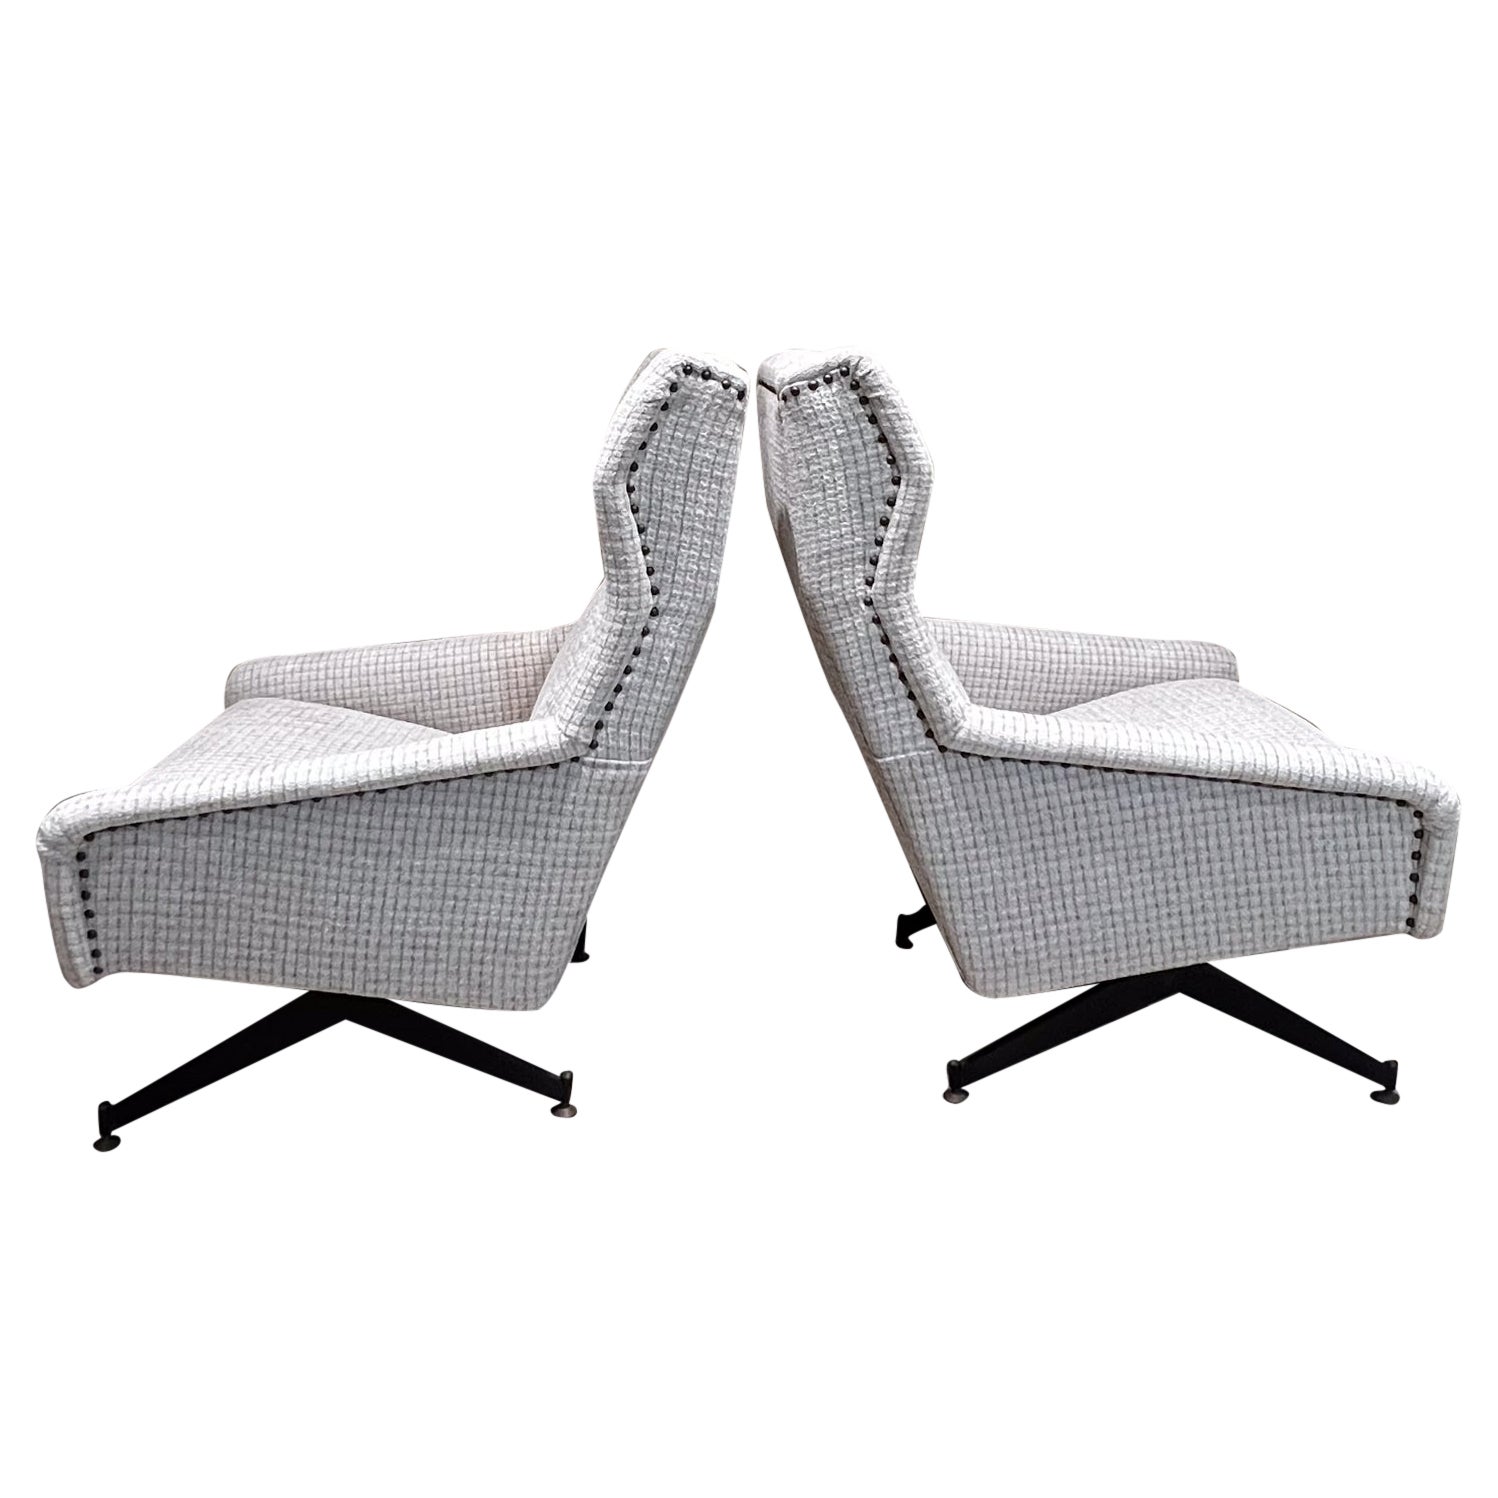 1960s Nello Pini for Novarredo Lounge Chairs Milan Italy For Sale